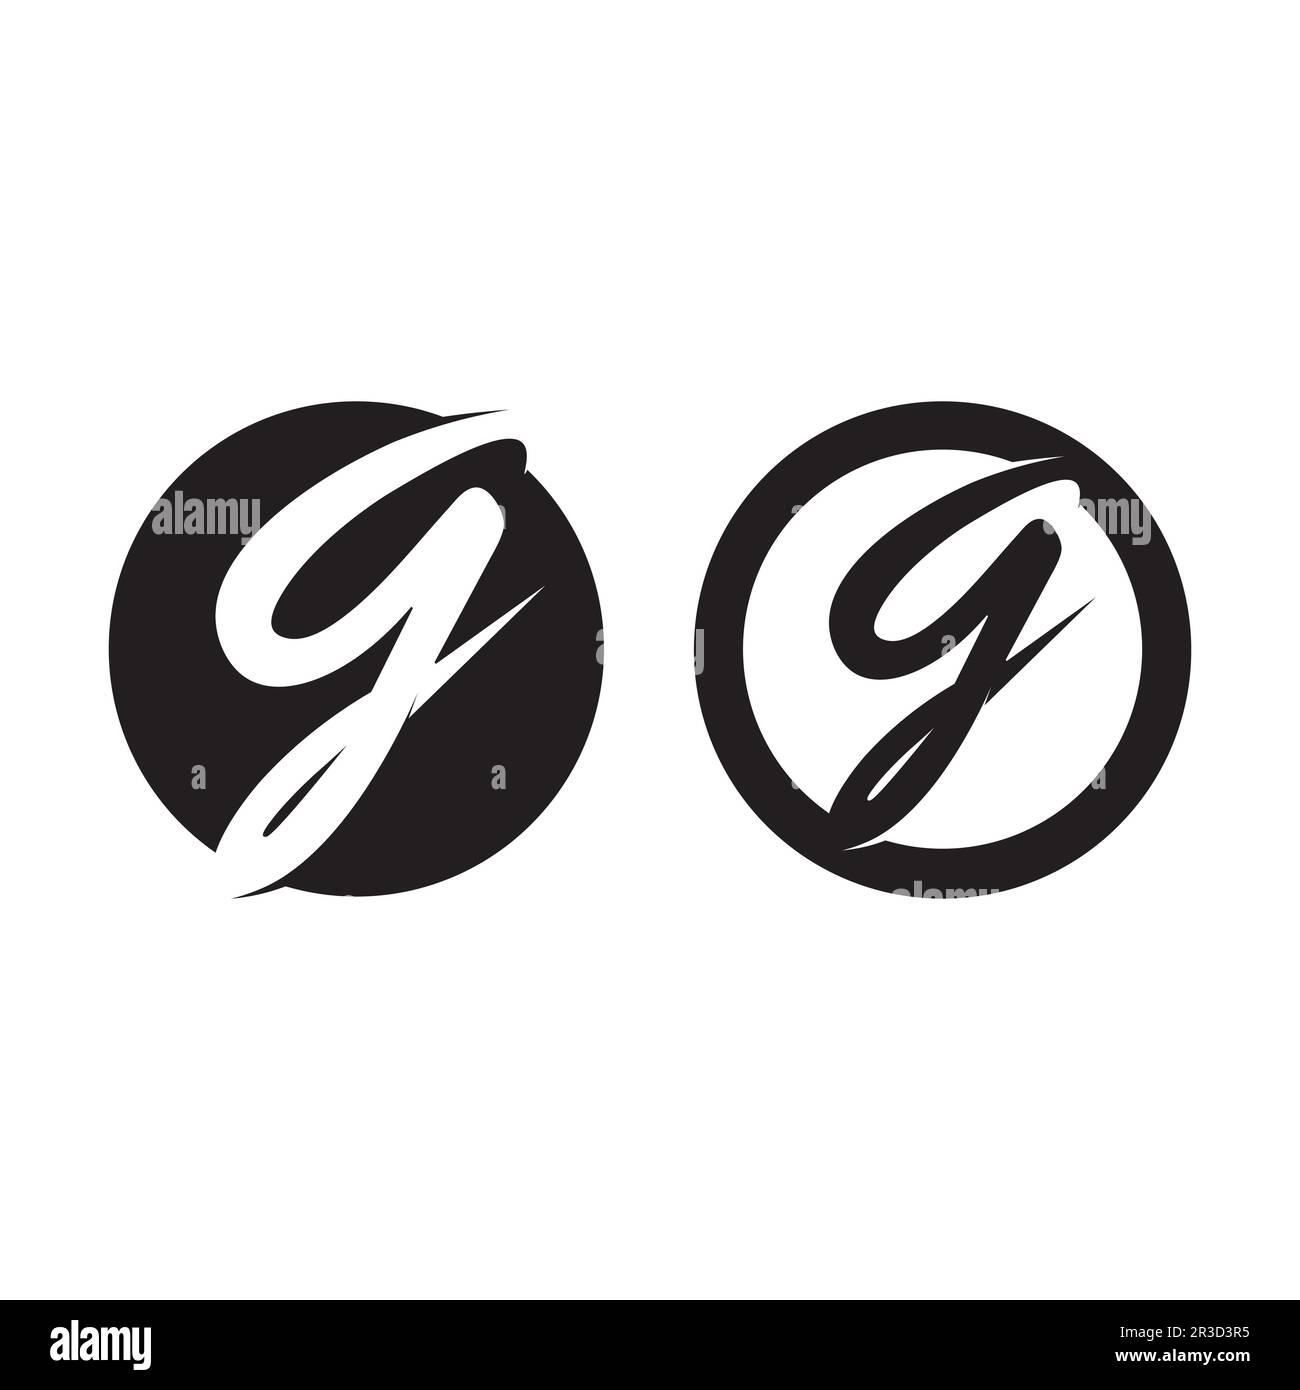 G Schreiben vector illustration symbol Logo Template Design Stock Vektor